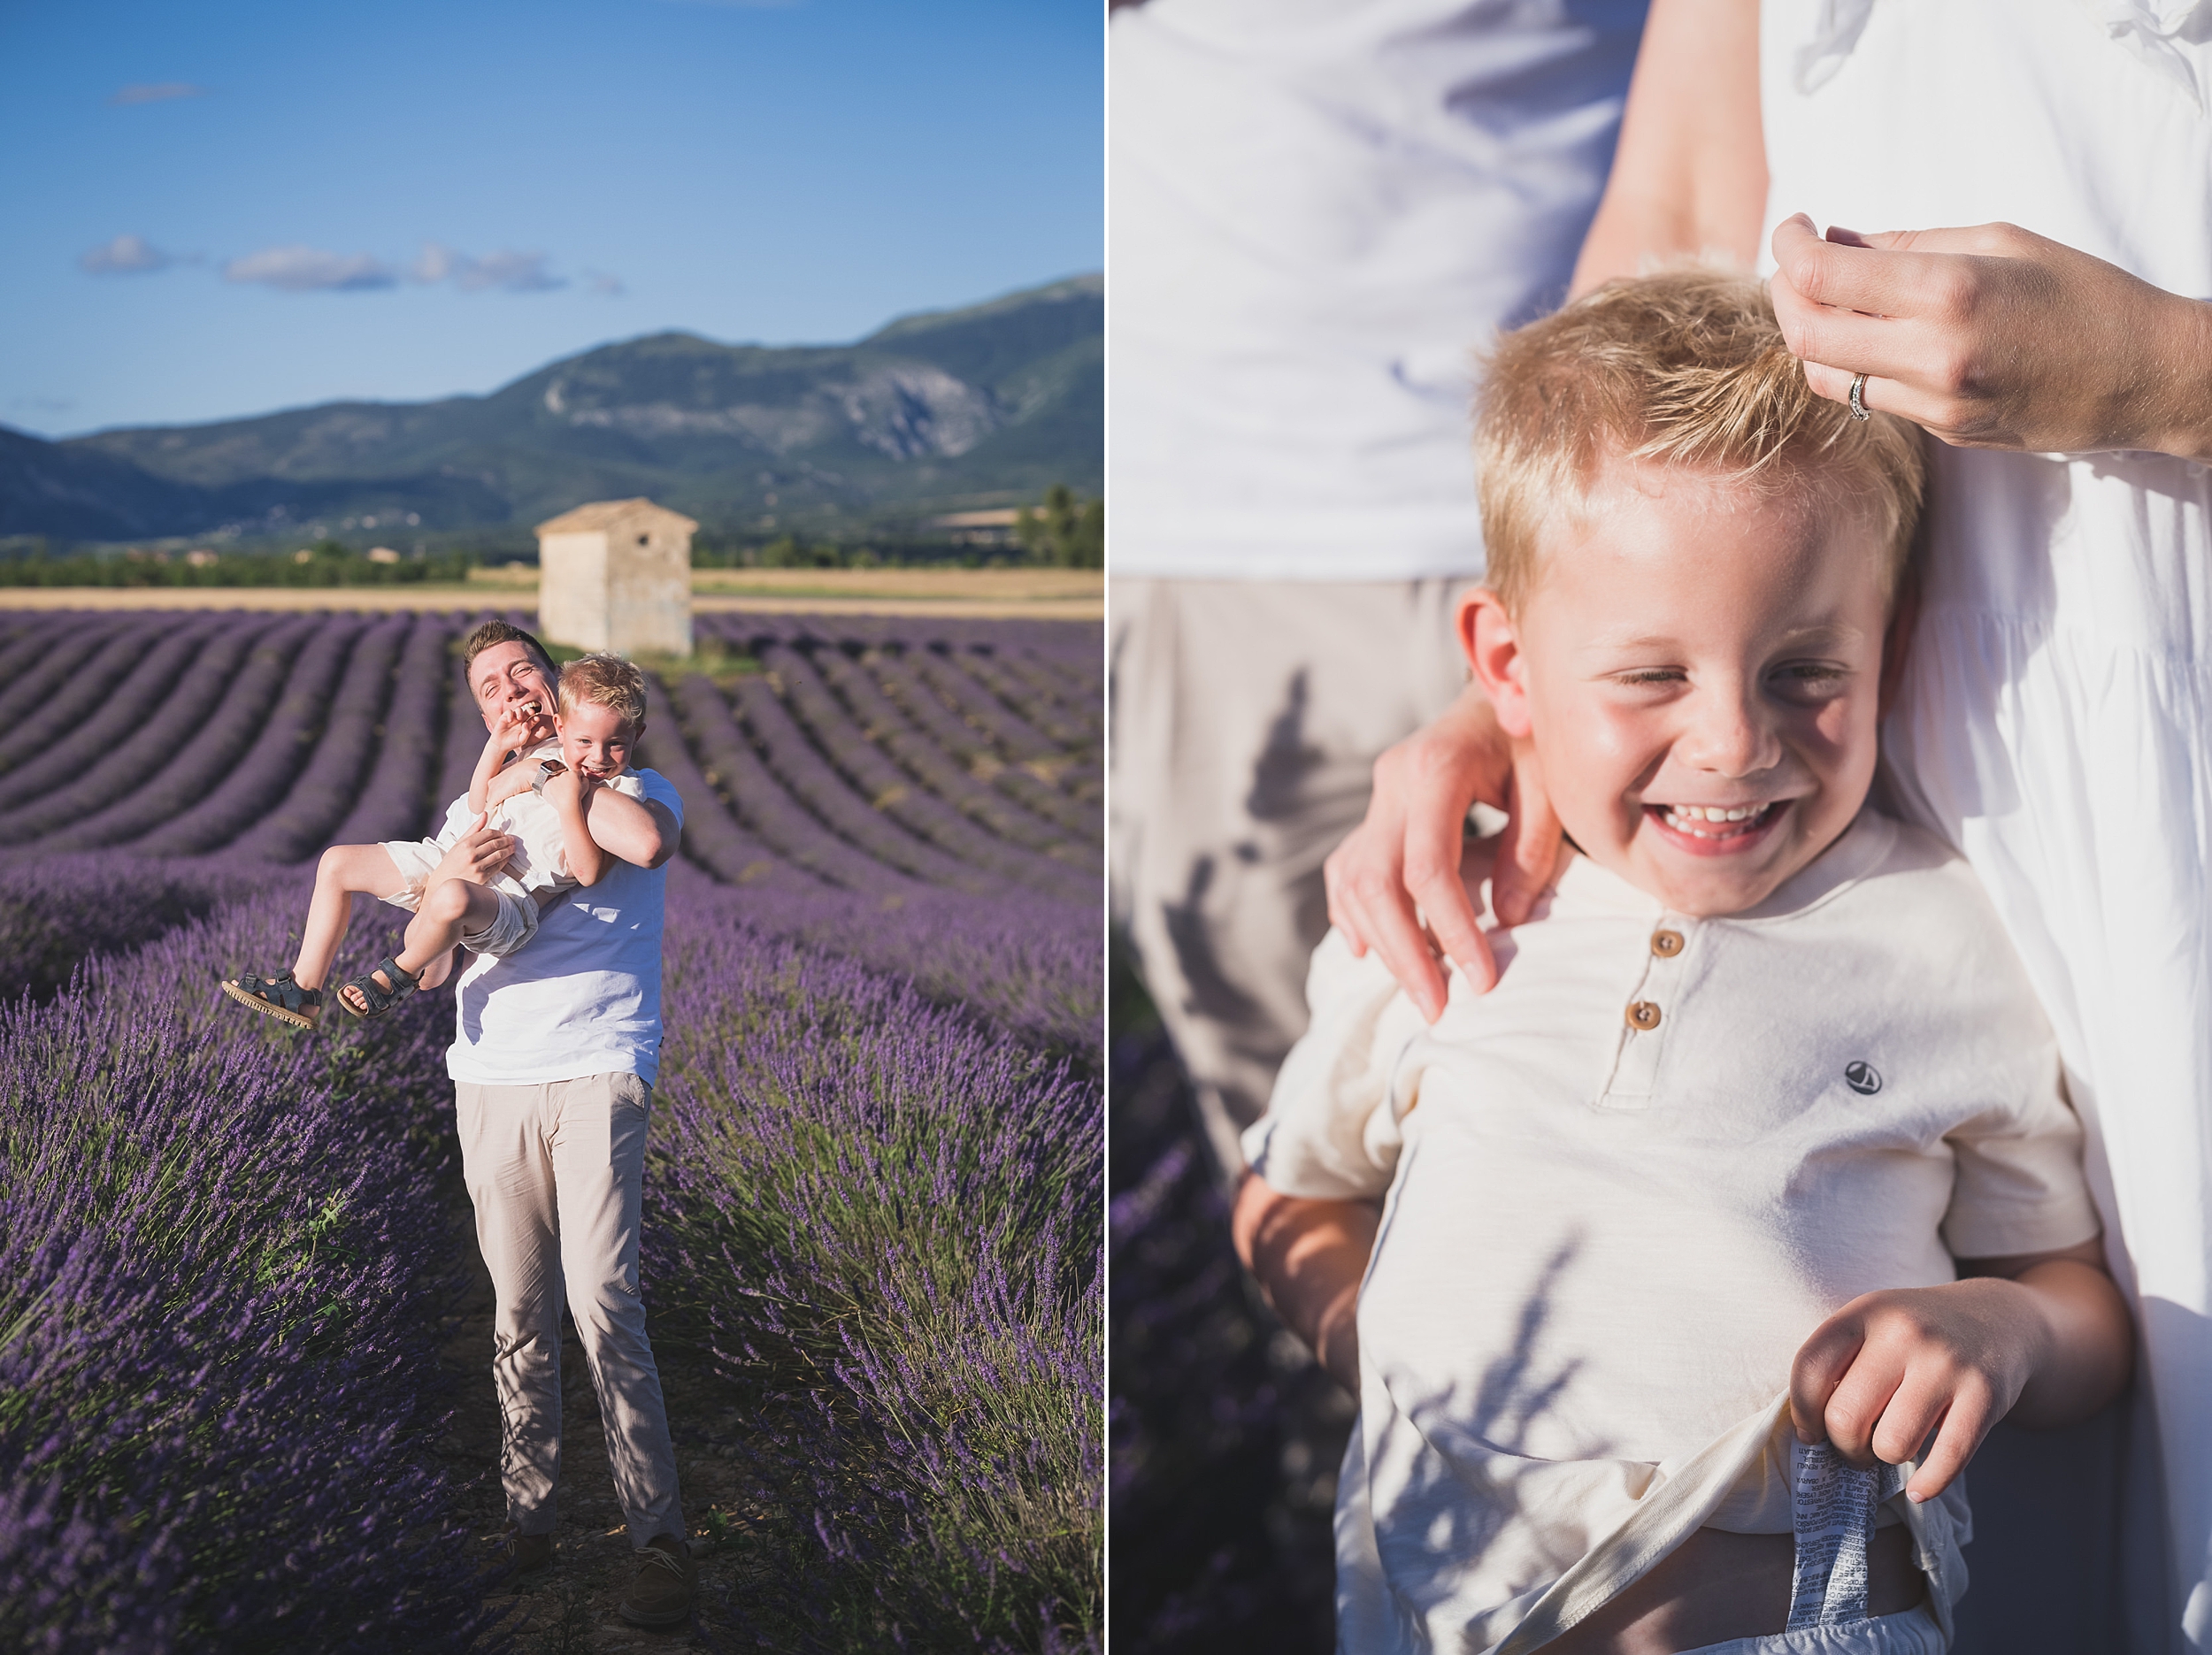 Family lavender photo session Valensole 143171